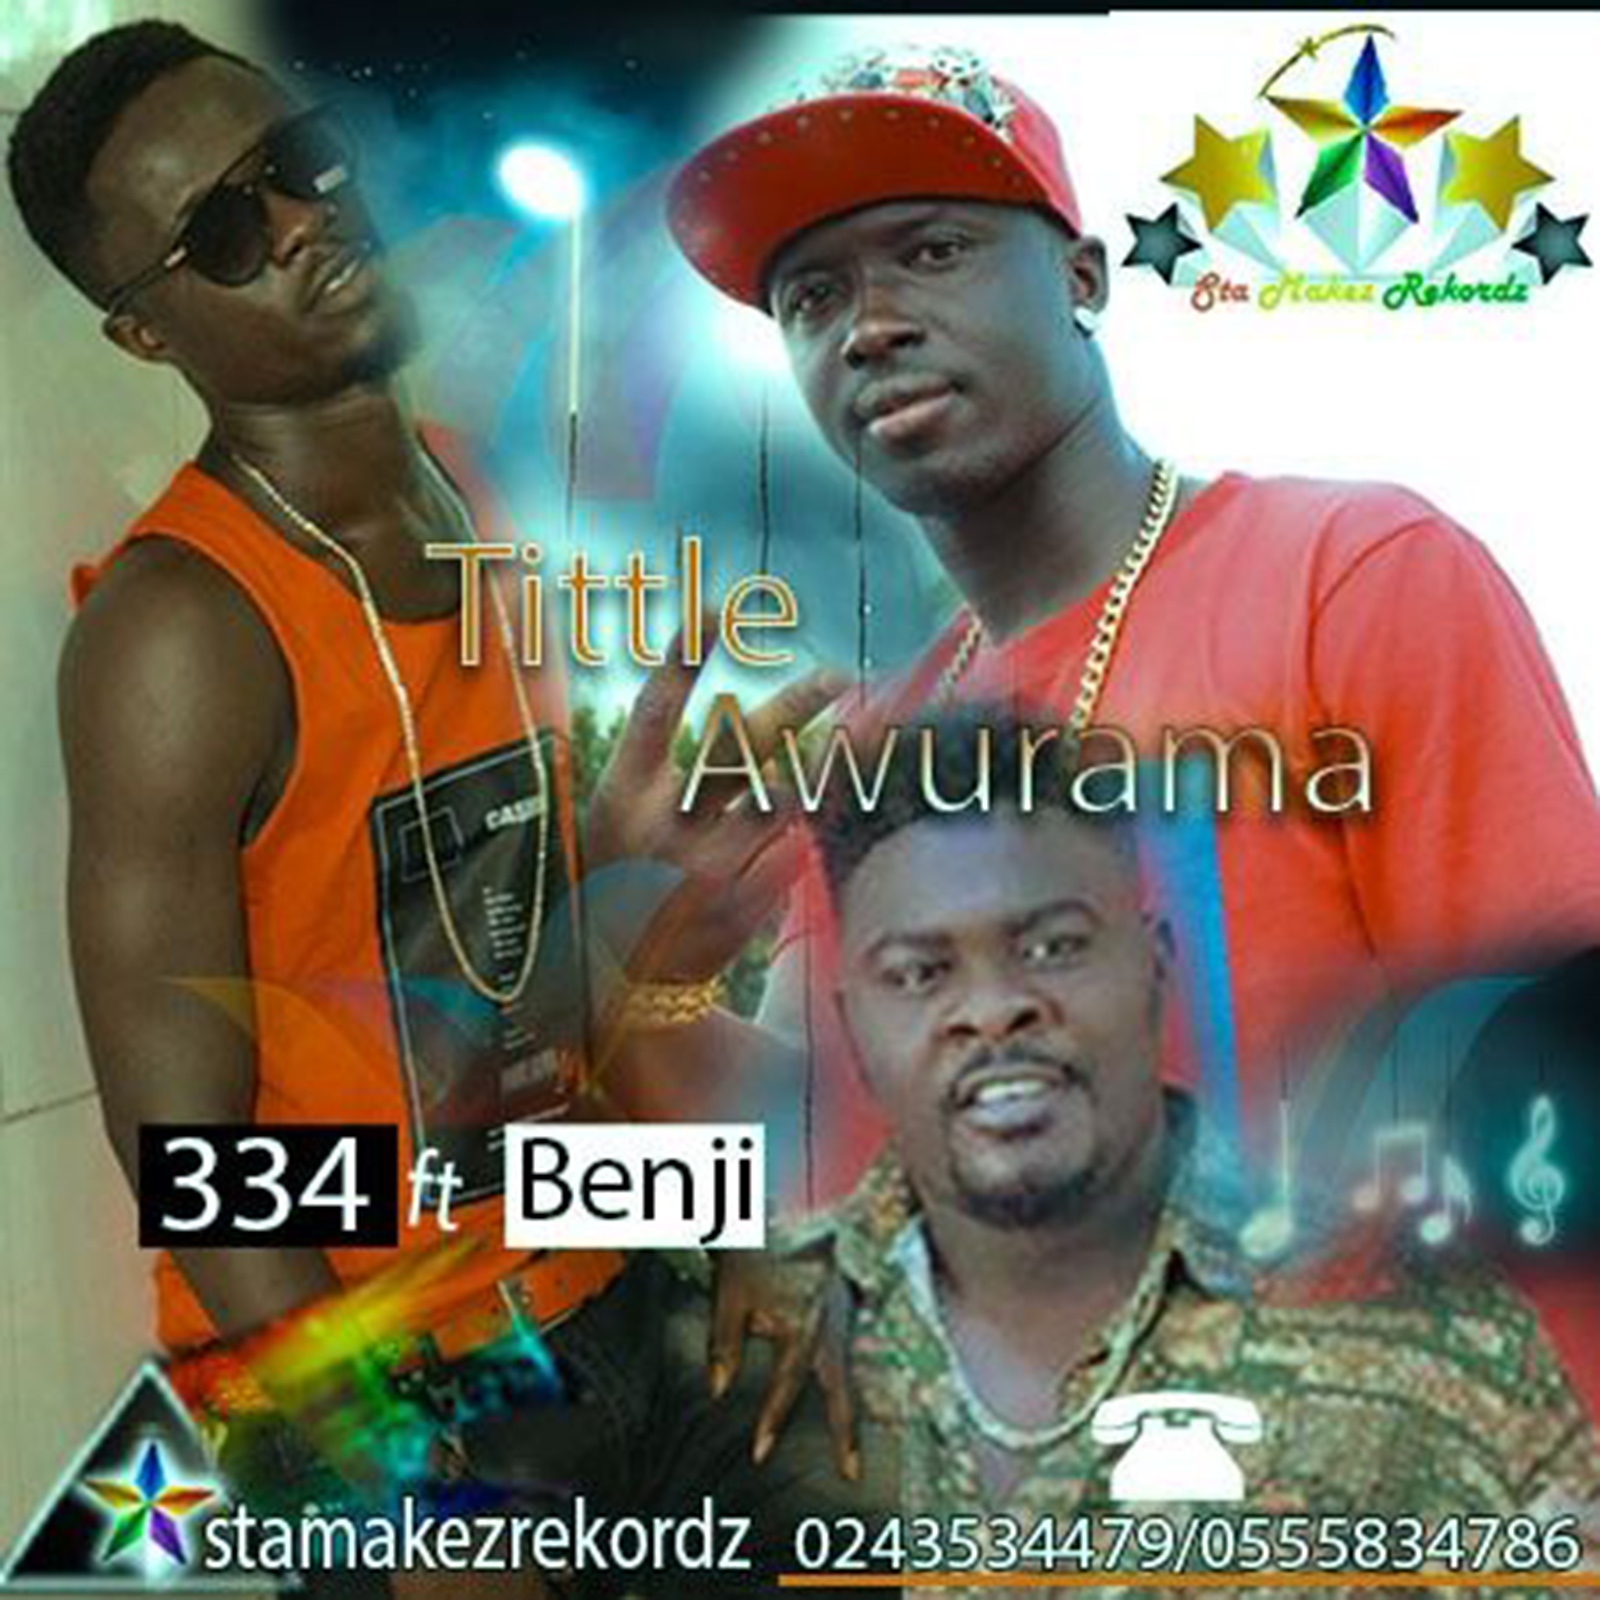 Awurama by 334 feat. Benji